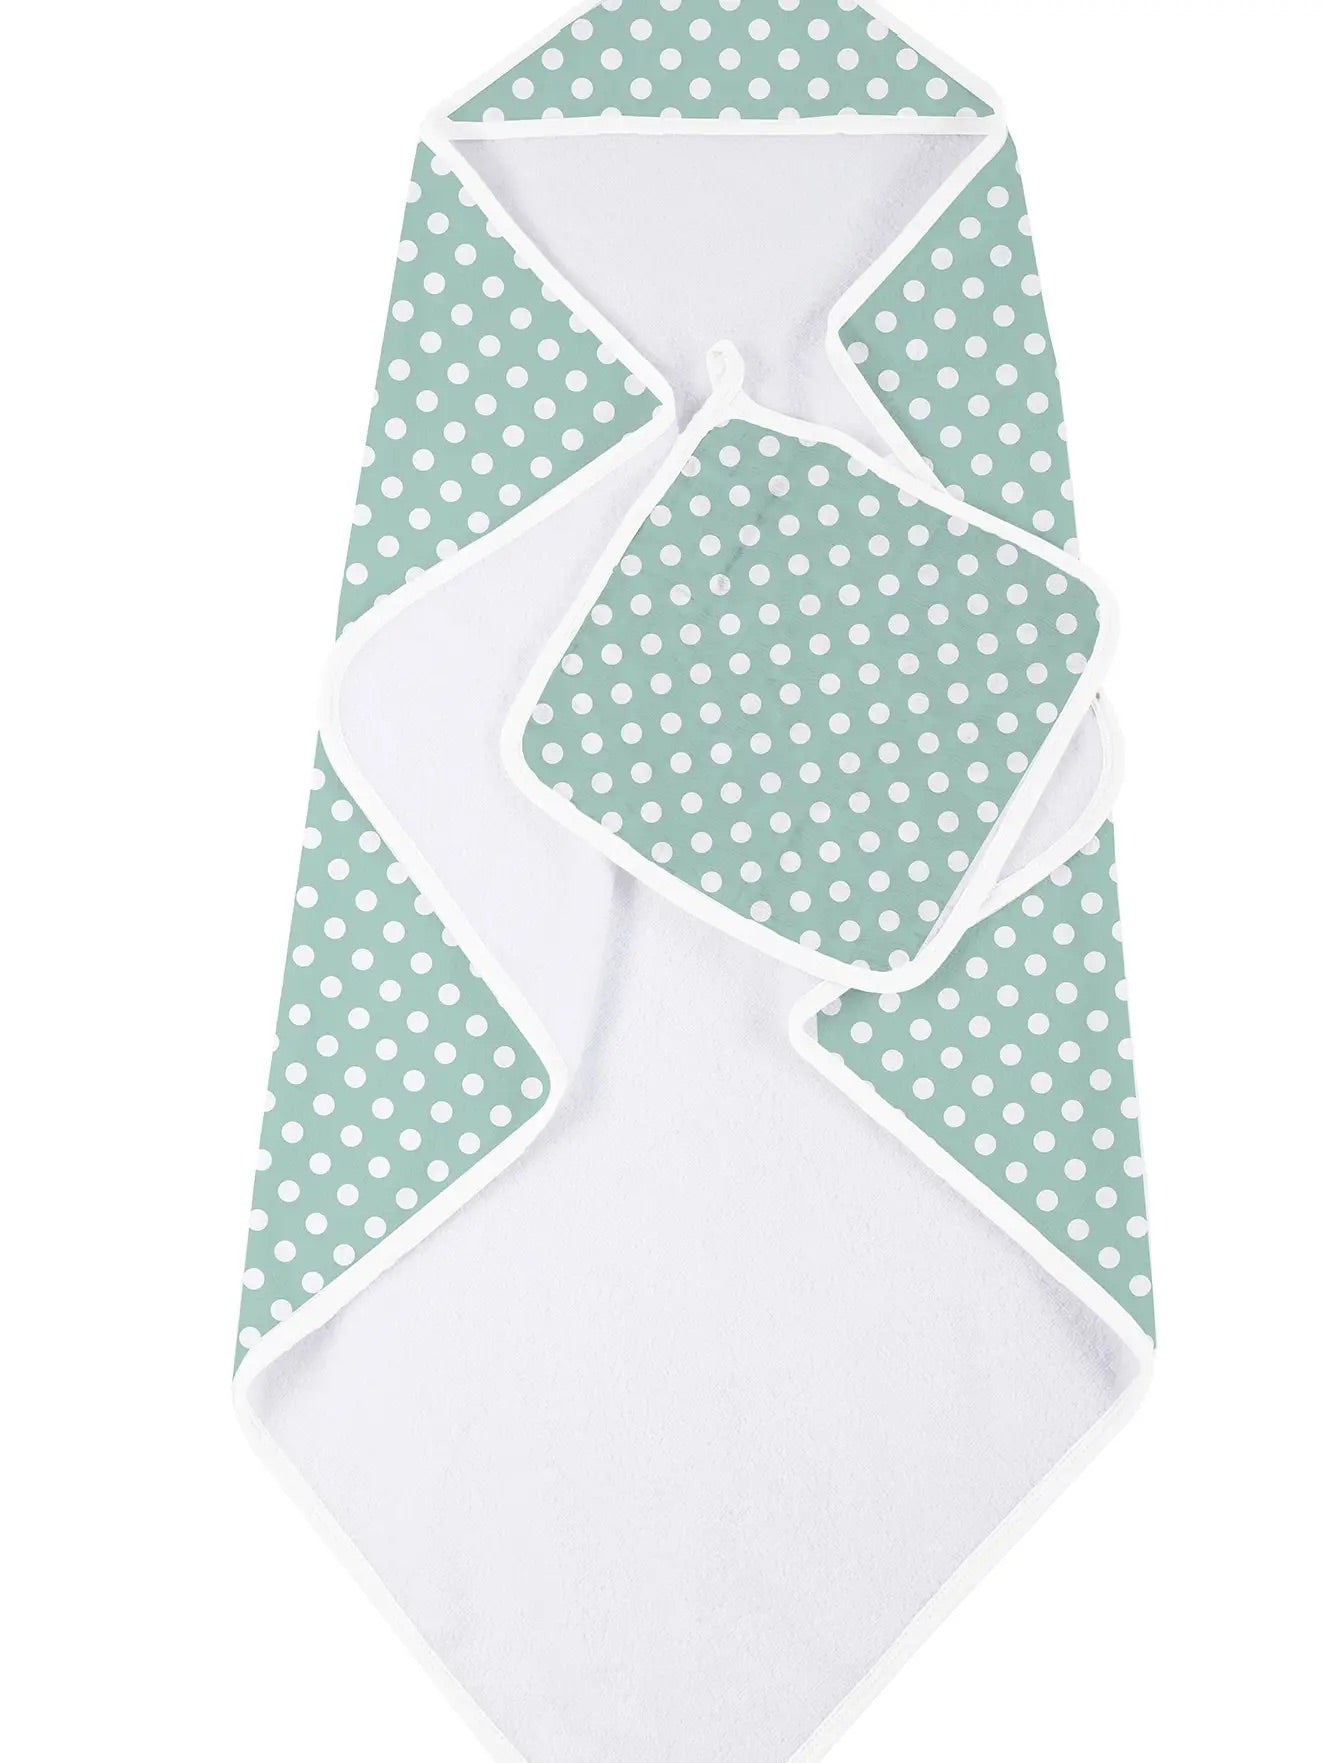 Jade Polka Dot Hooded Towel and Washcloth Set